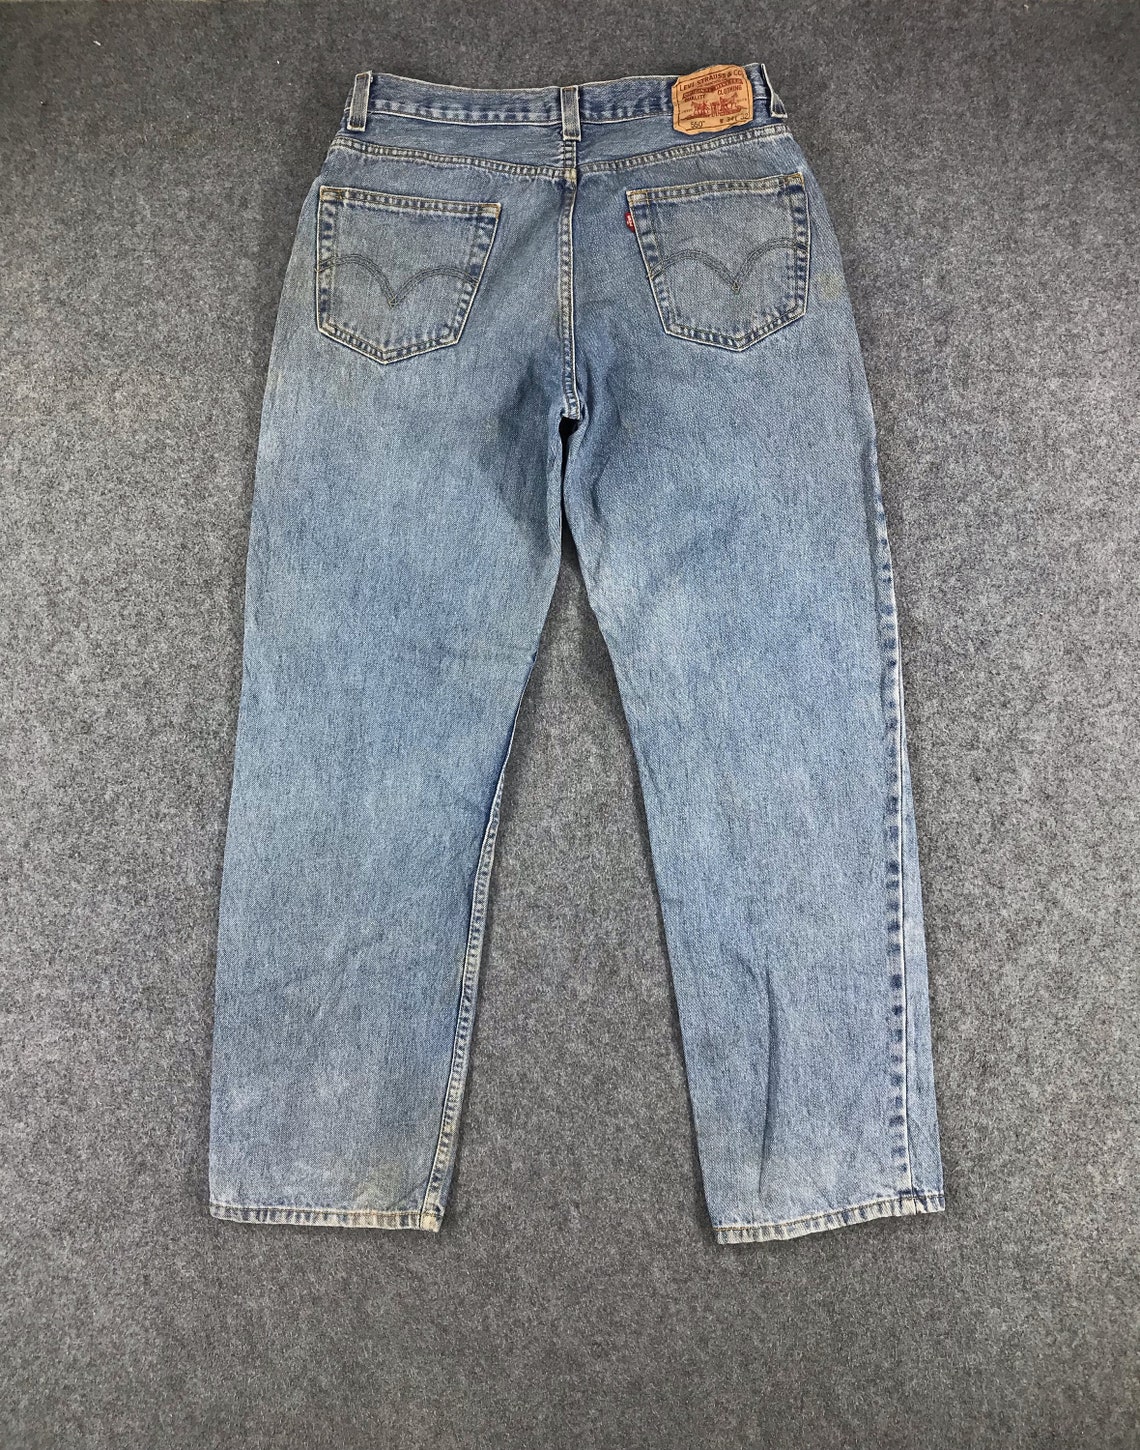 Vintage Levis Jeans 550 Light Wash Denim 33x31 | Etsy